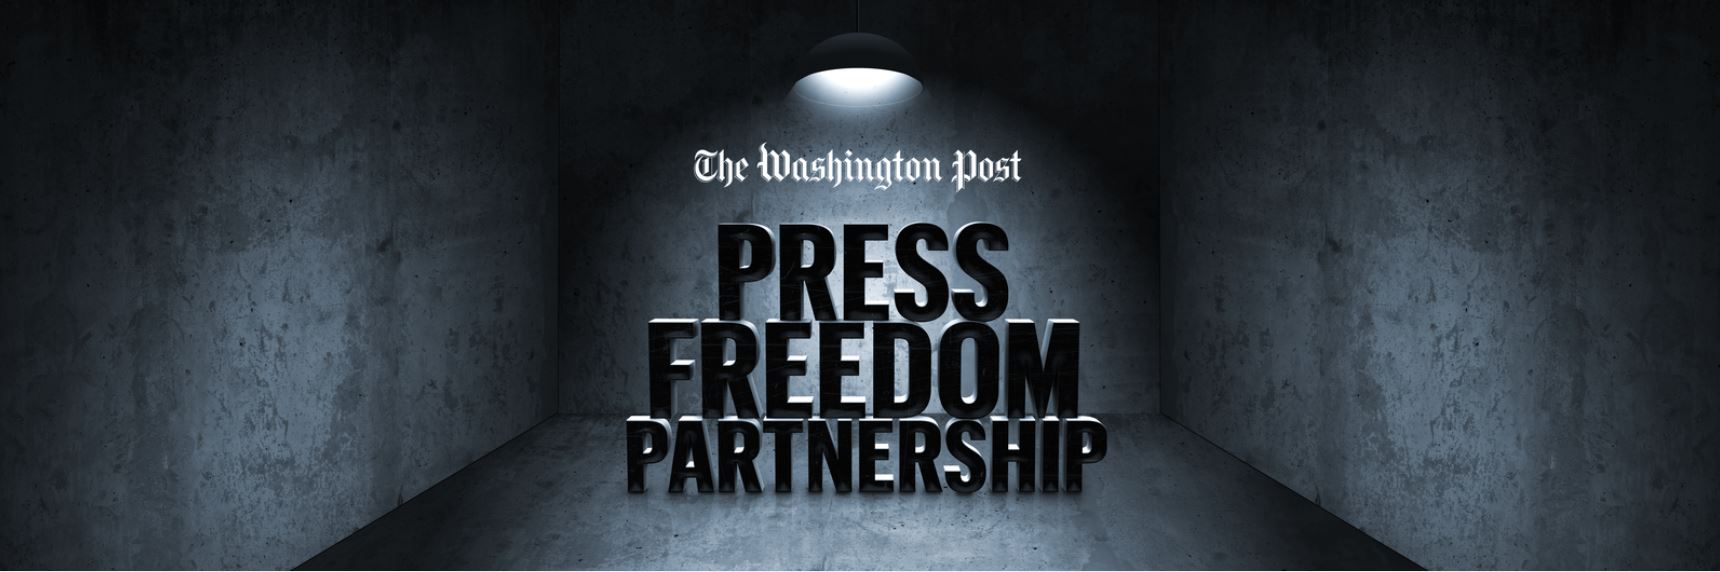 newsletter clipart freedom press